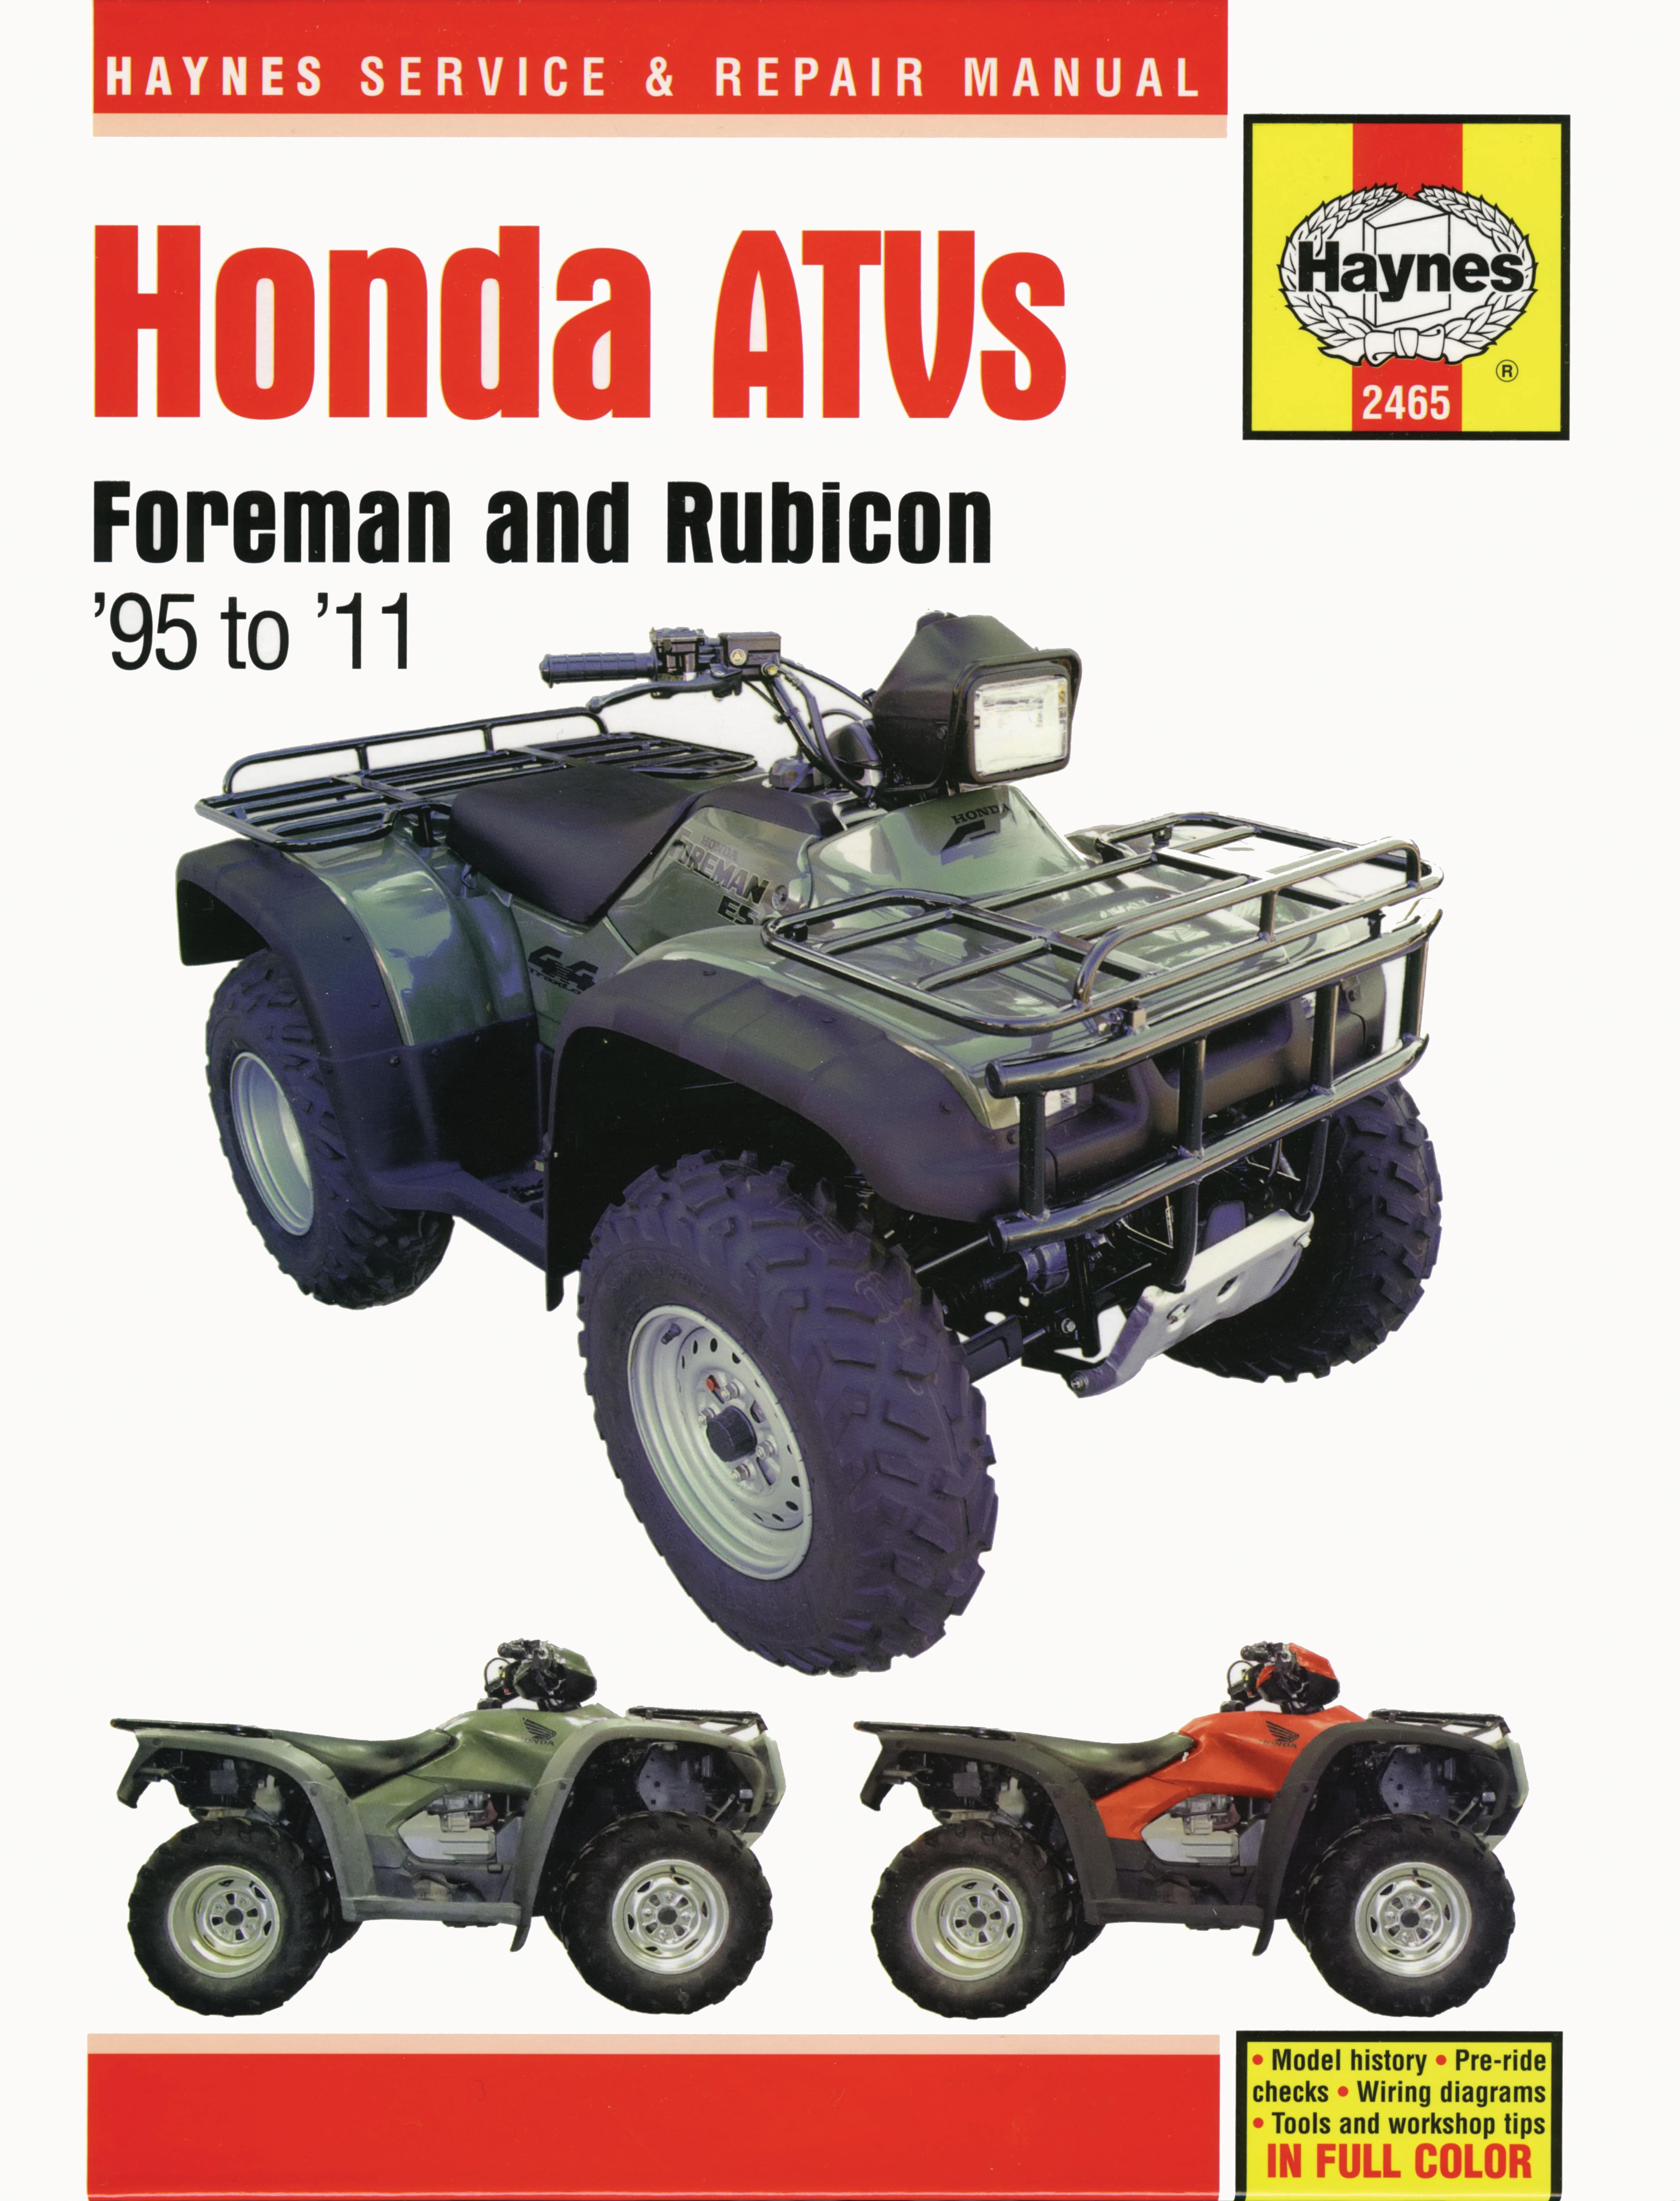 HONDA ATV FOREMAN RUBICON (19952011) instrukcja